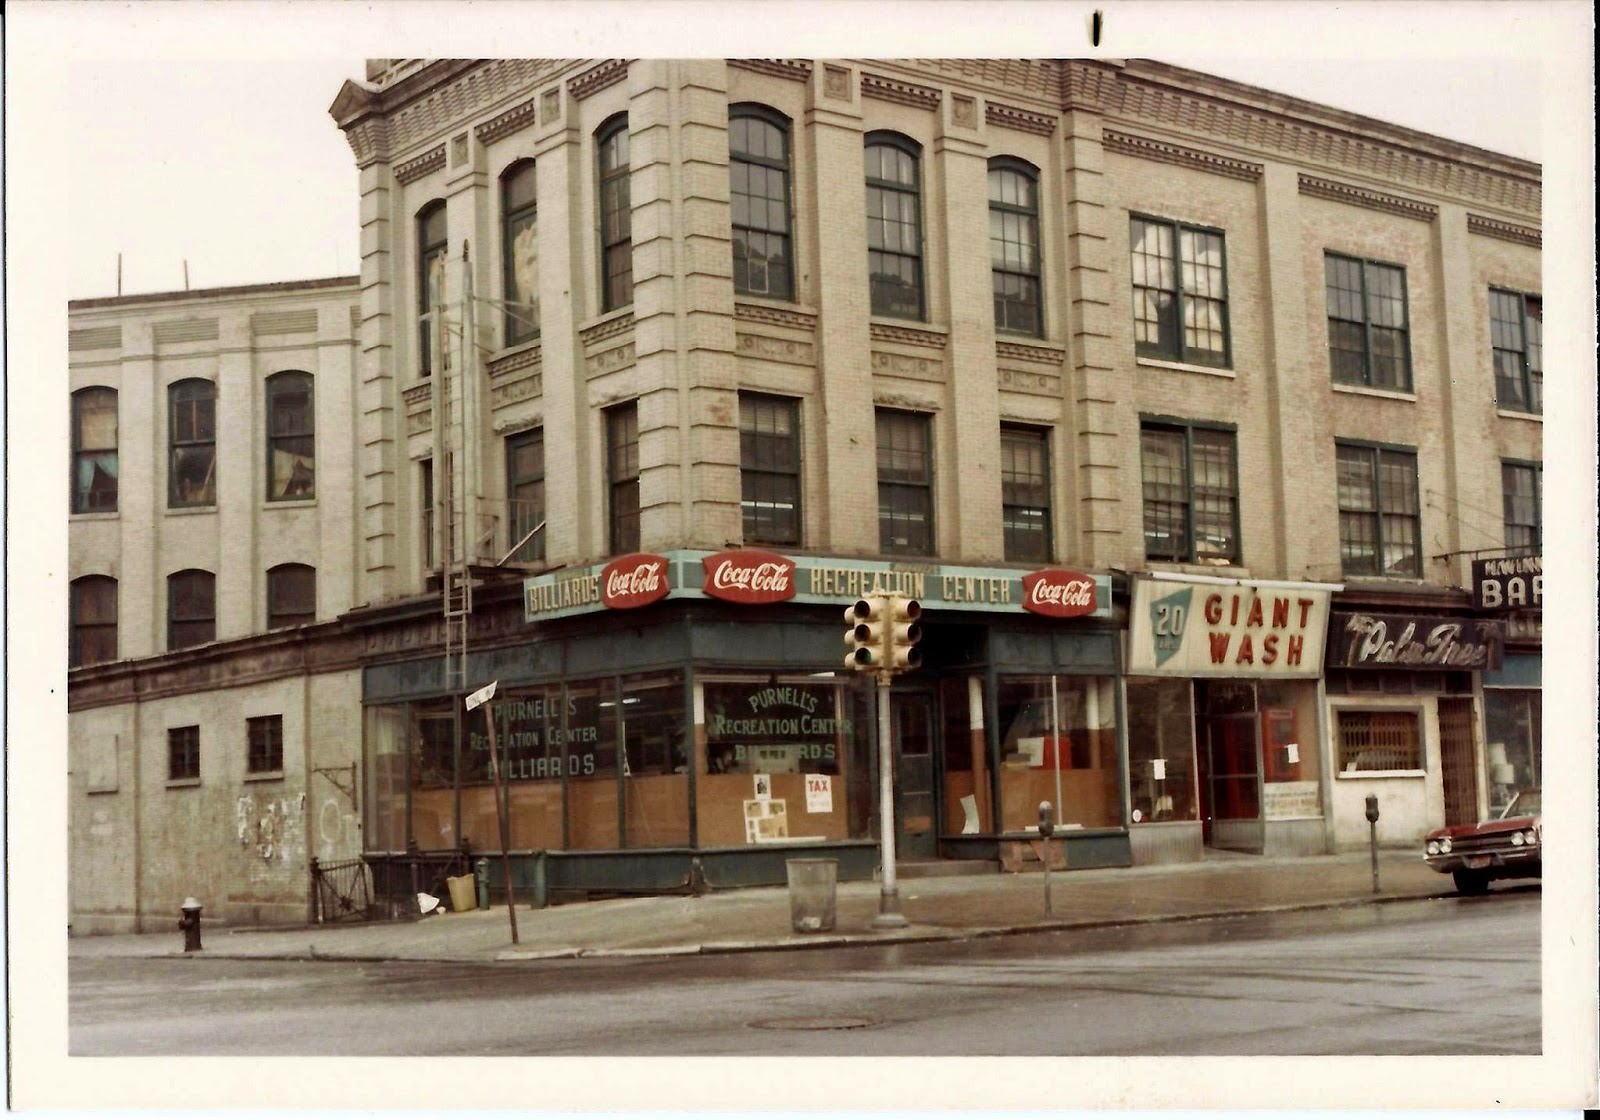 Northwest corner of Amsterdam Avenue and 150th Street, 1970